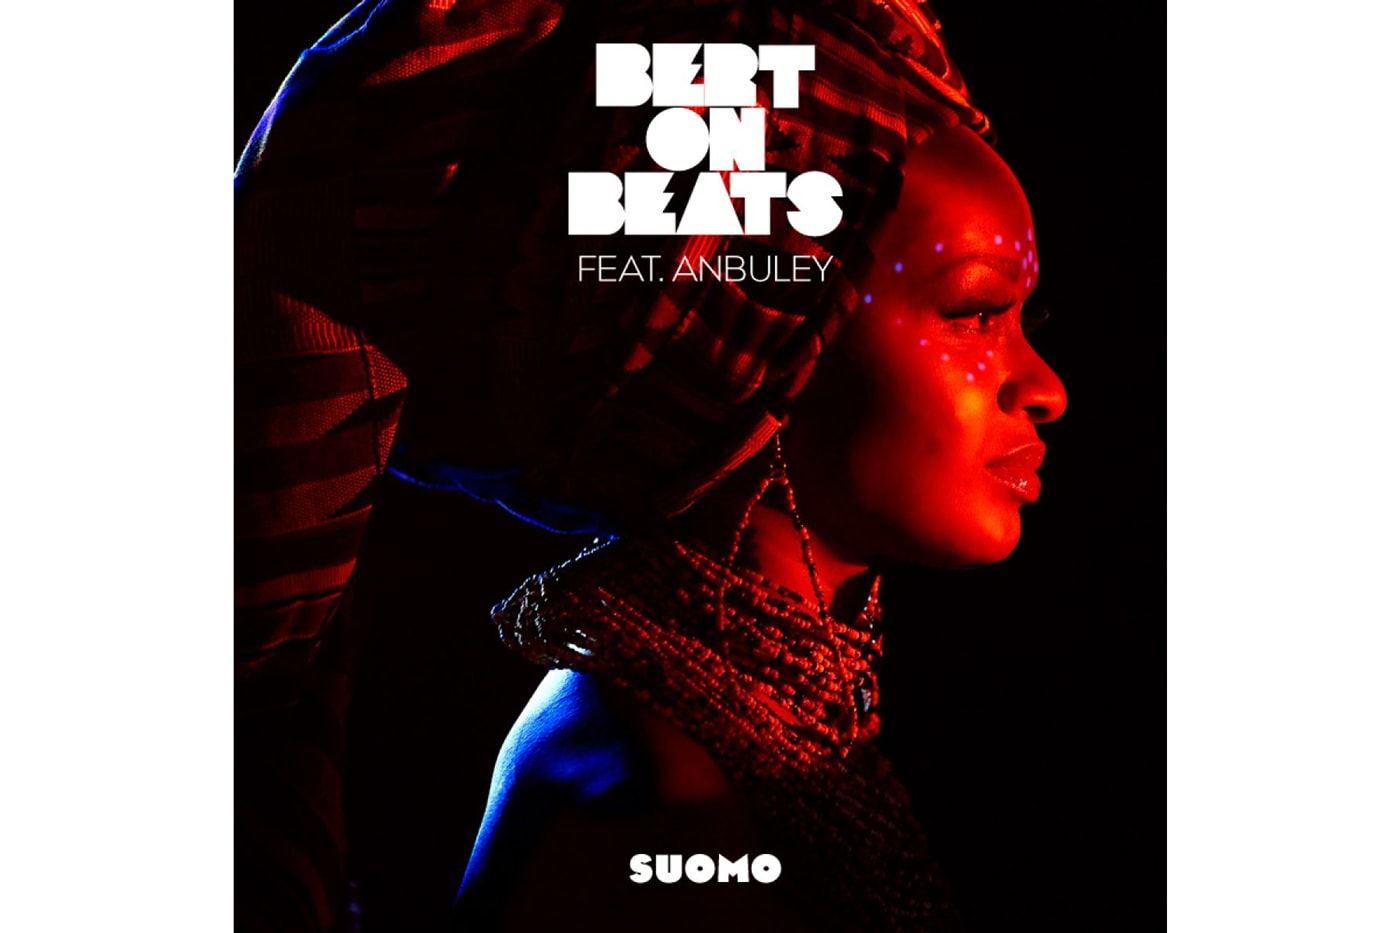 bert-on-beats-featuring-anbuley-suomo